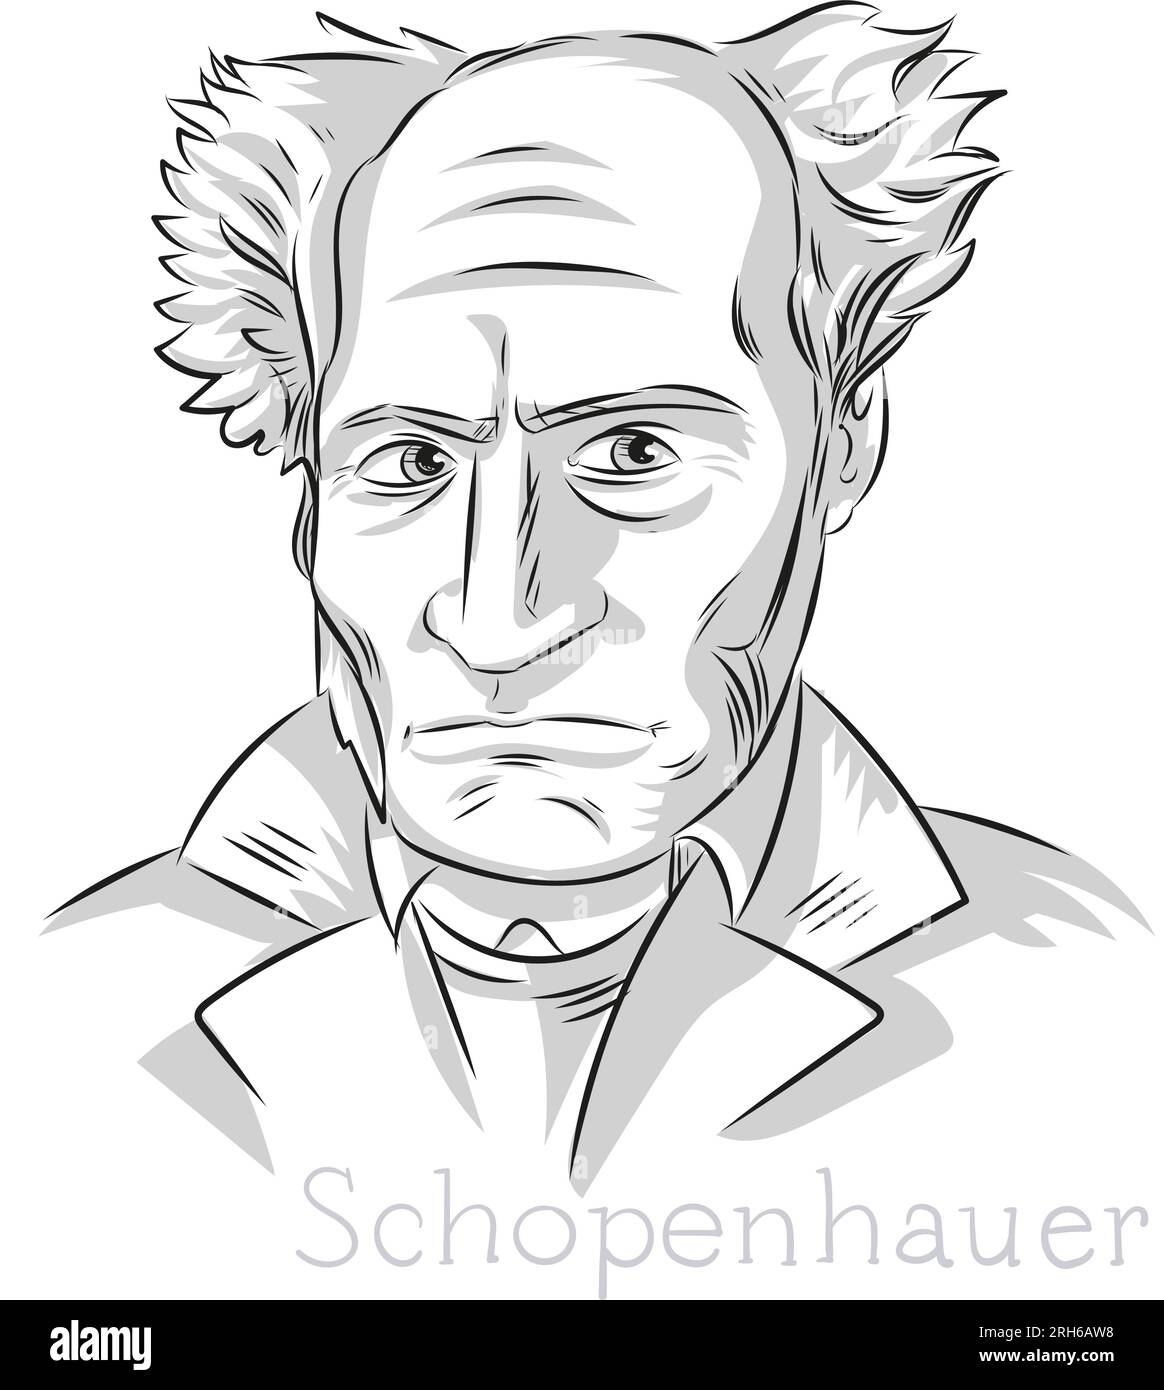 Schopenhauer Philosopher Hand drawn line art Portrait Illustration Stock Vector